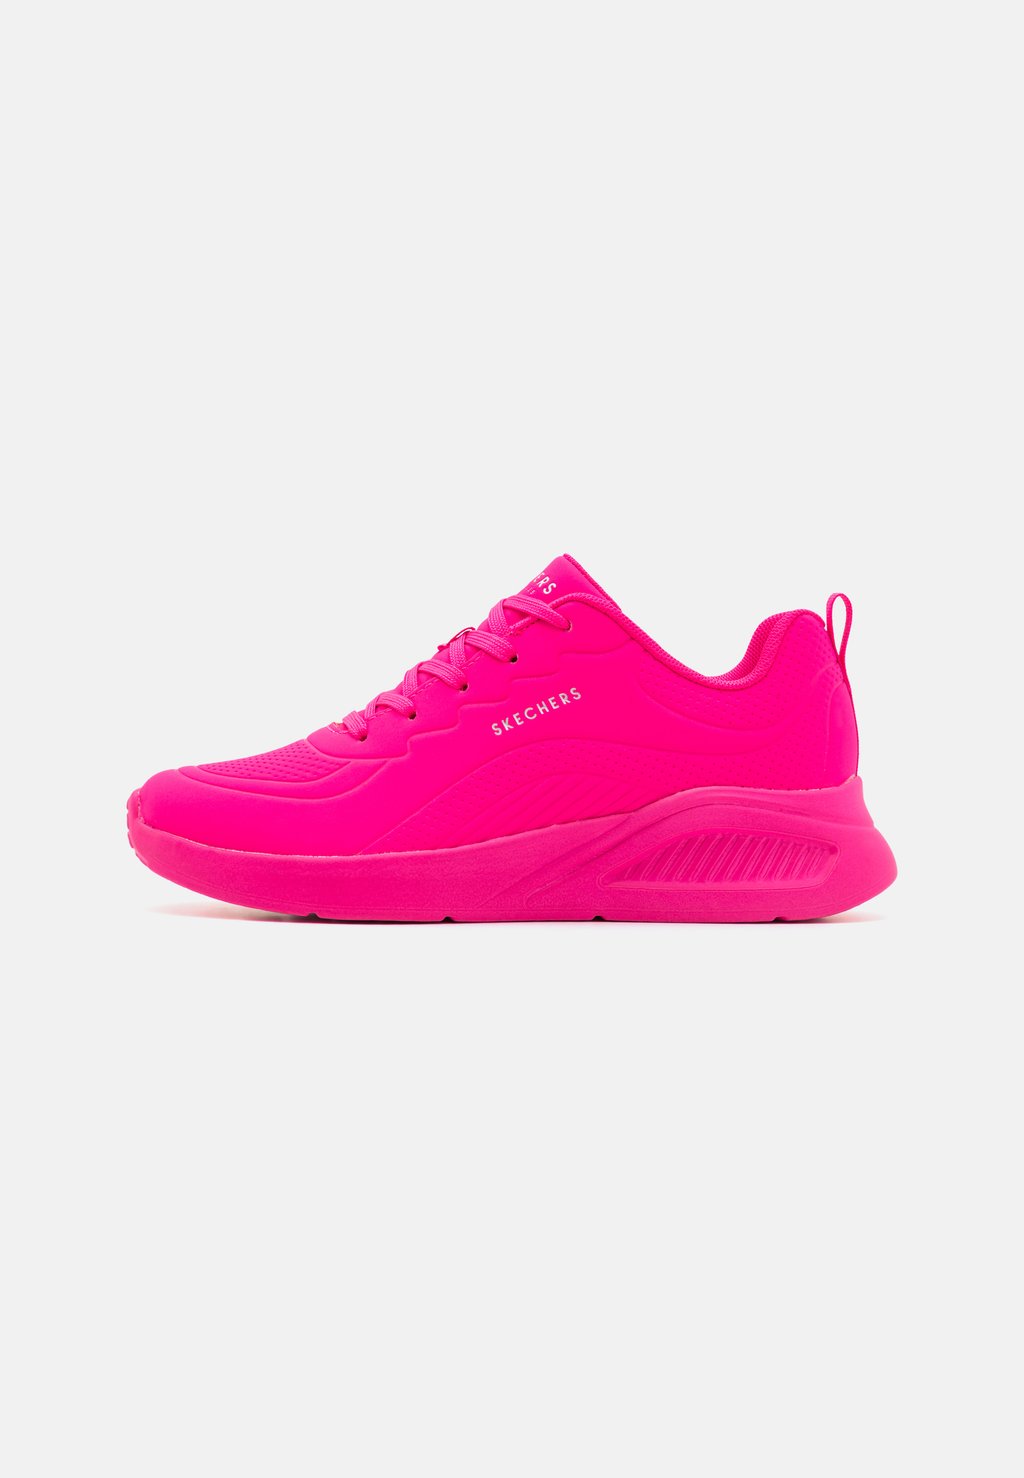 Низкие кроссовки Uno Lite Skechers Sport, розовый кроссовки низкие uno lite skechers sport цвет black multi coloured